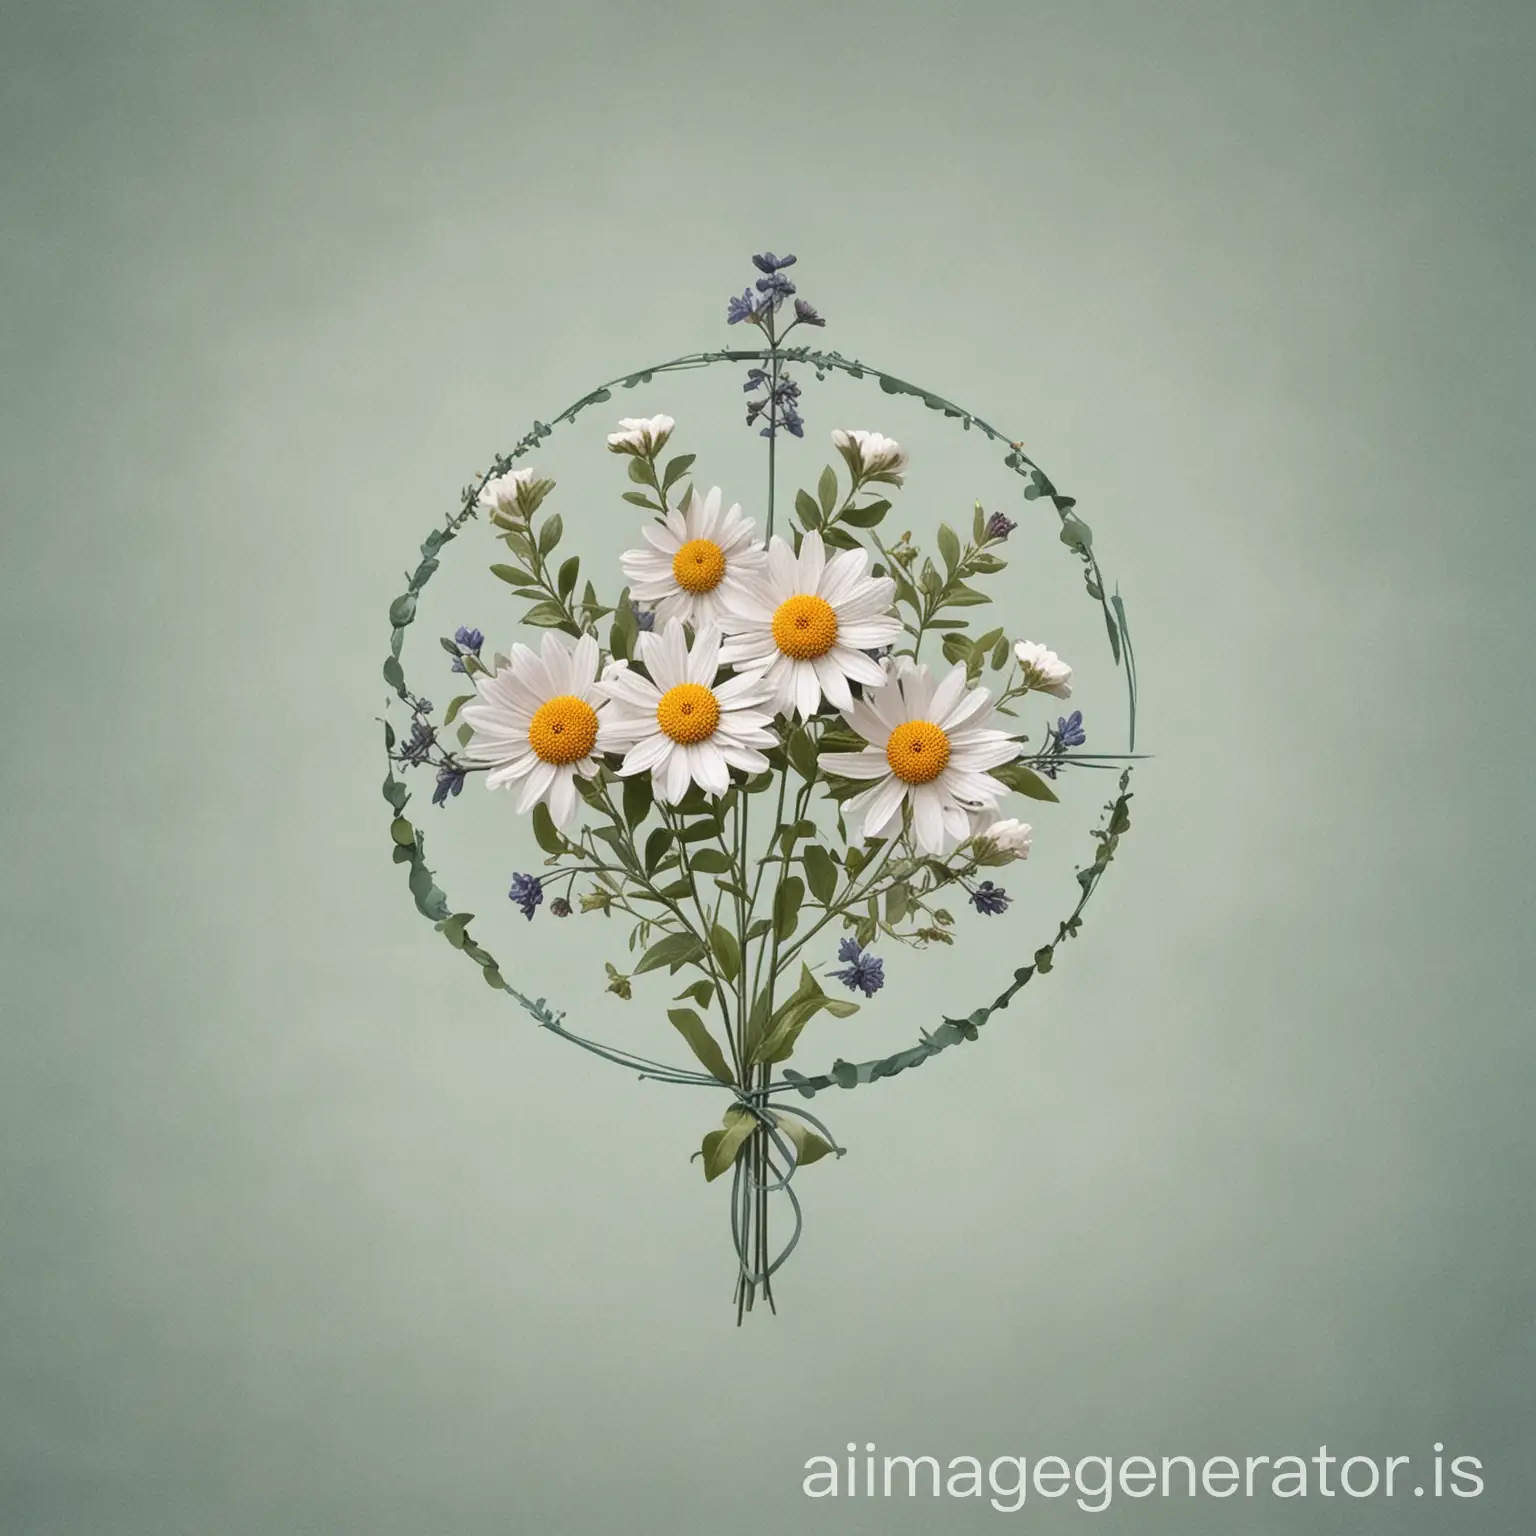 Whimsical-Mindset-Symbolized-Tranquil-Scene-with-Vibrant-Flowers